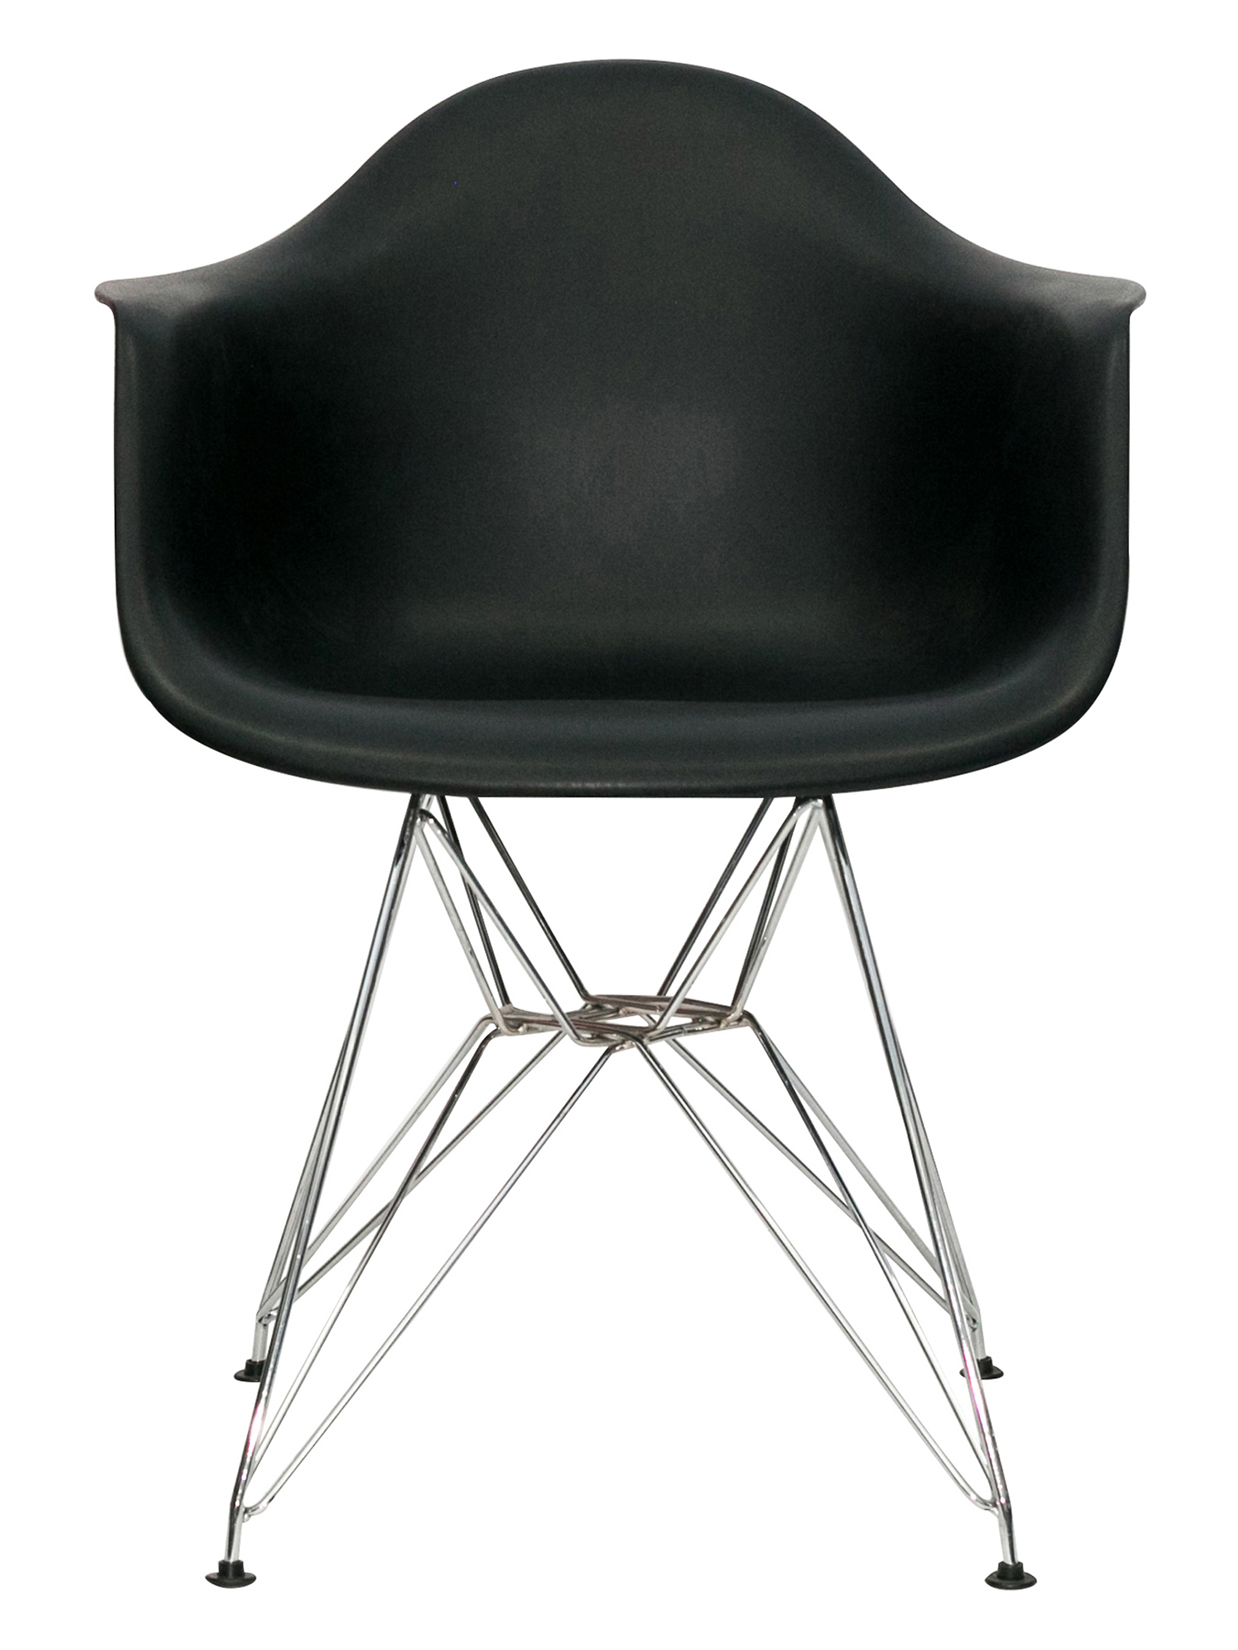 Дизайнерское кресло Stool Group Имс Дар